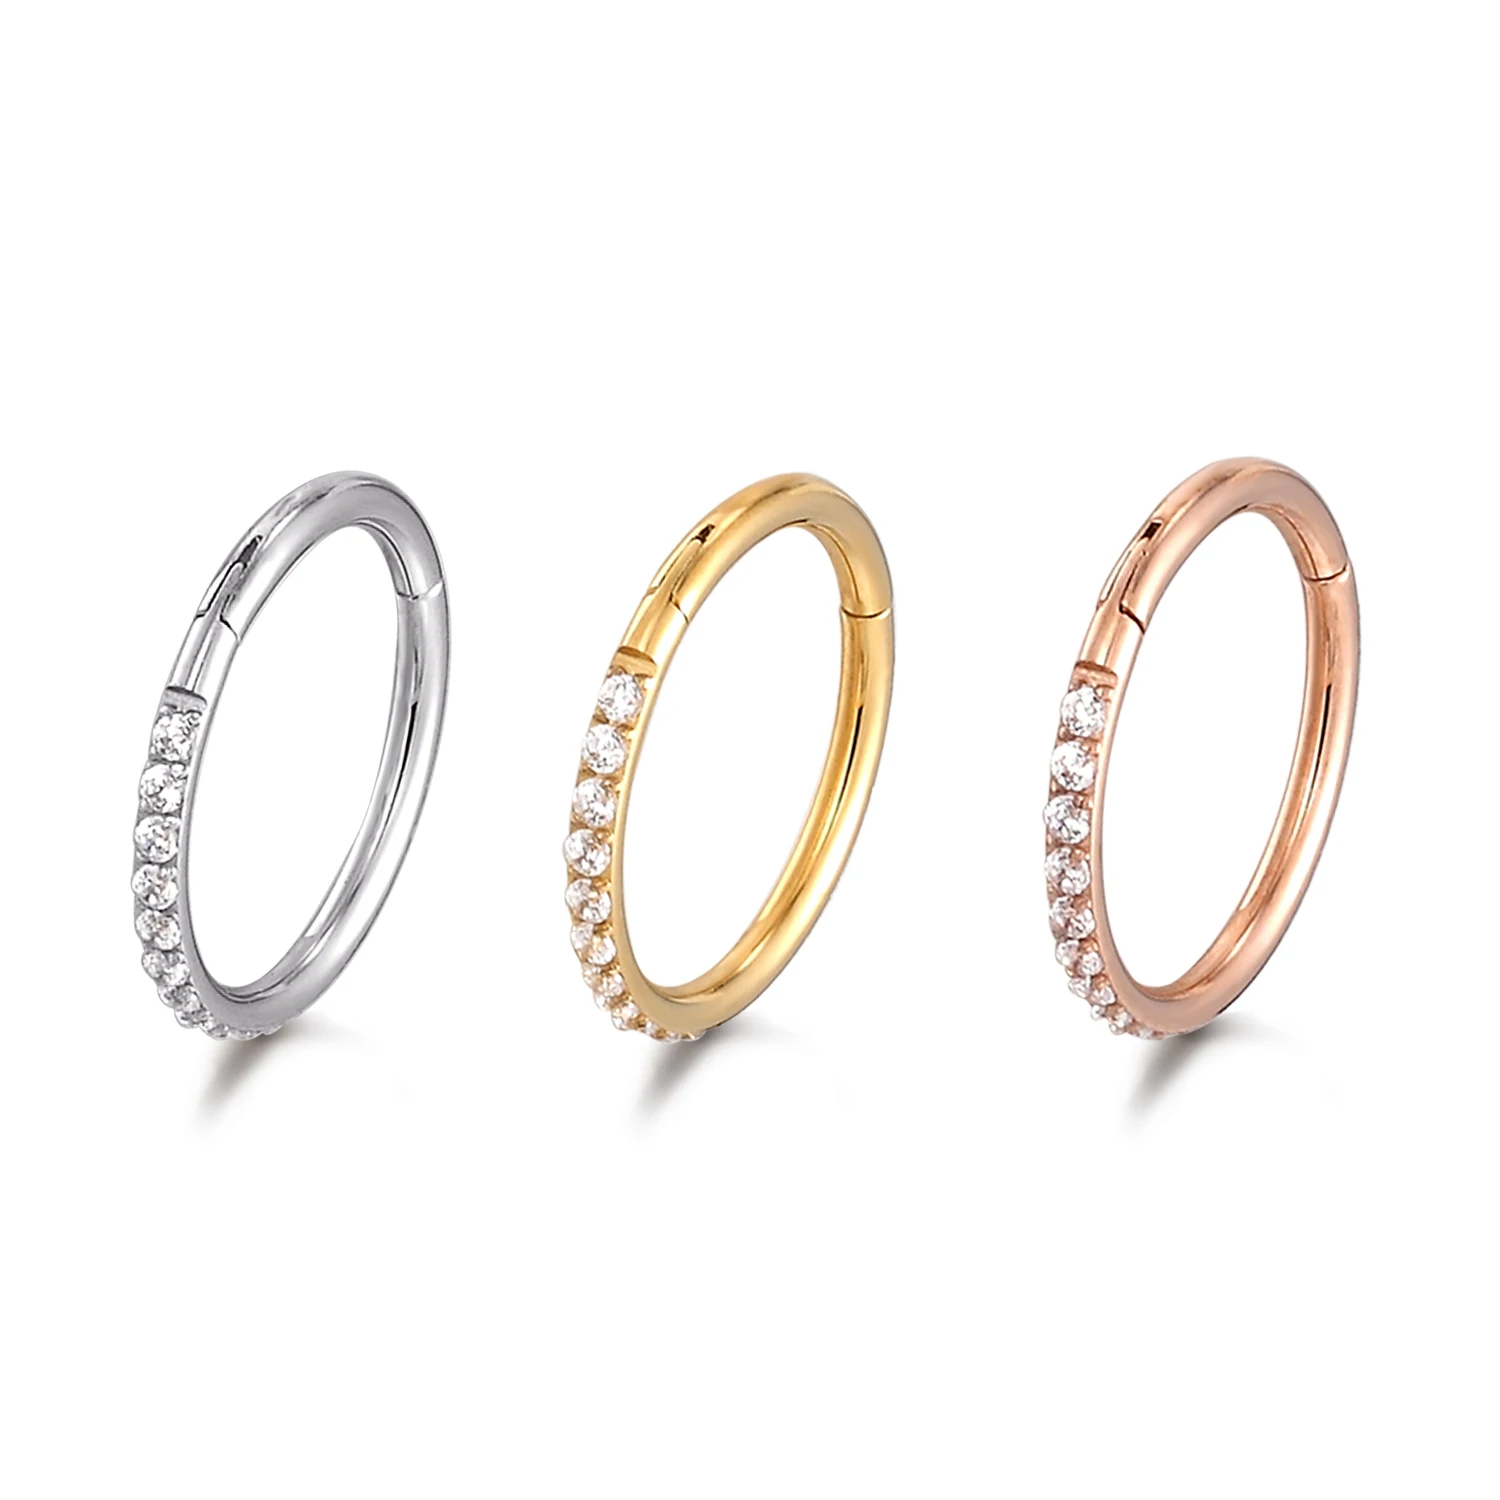 6-12mm Stainless Steel Zircon stone Hight Segment Clicker Ring Nose Septum Jewelry Earrings Septum Ring Piercing Fashion Jewelr